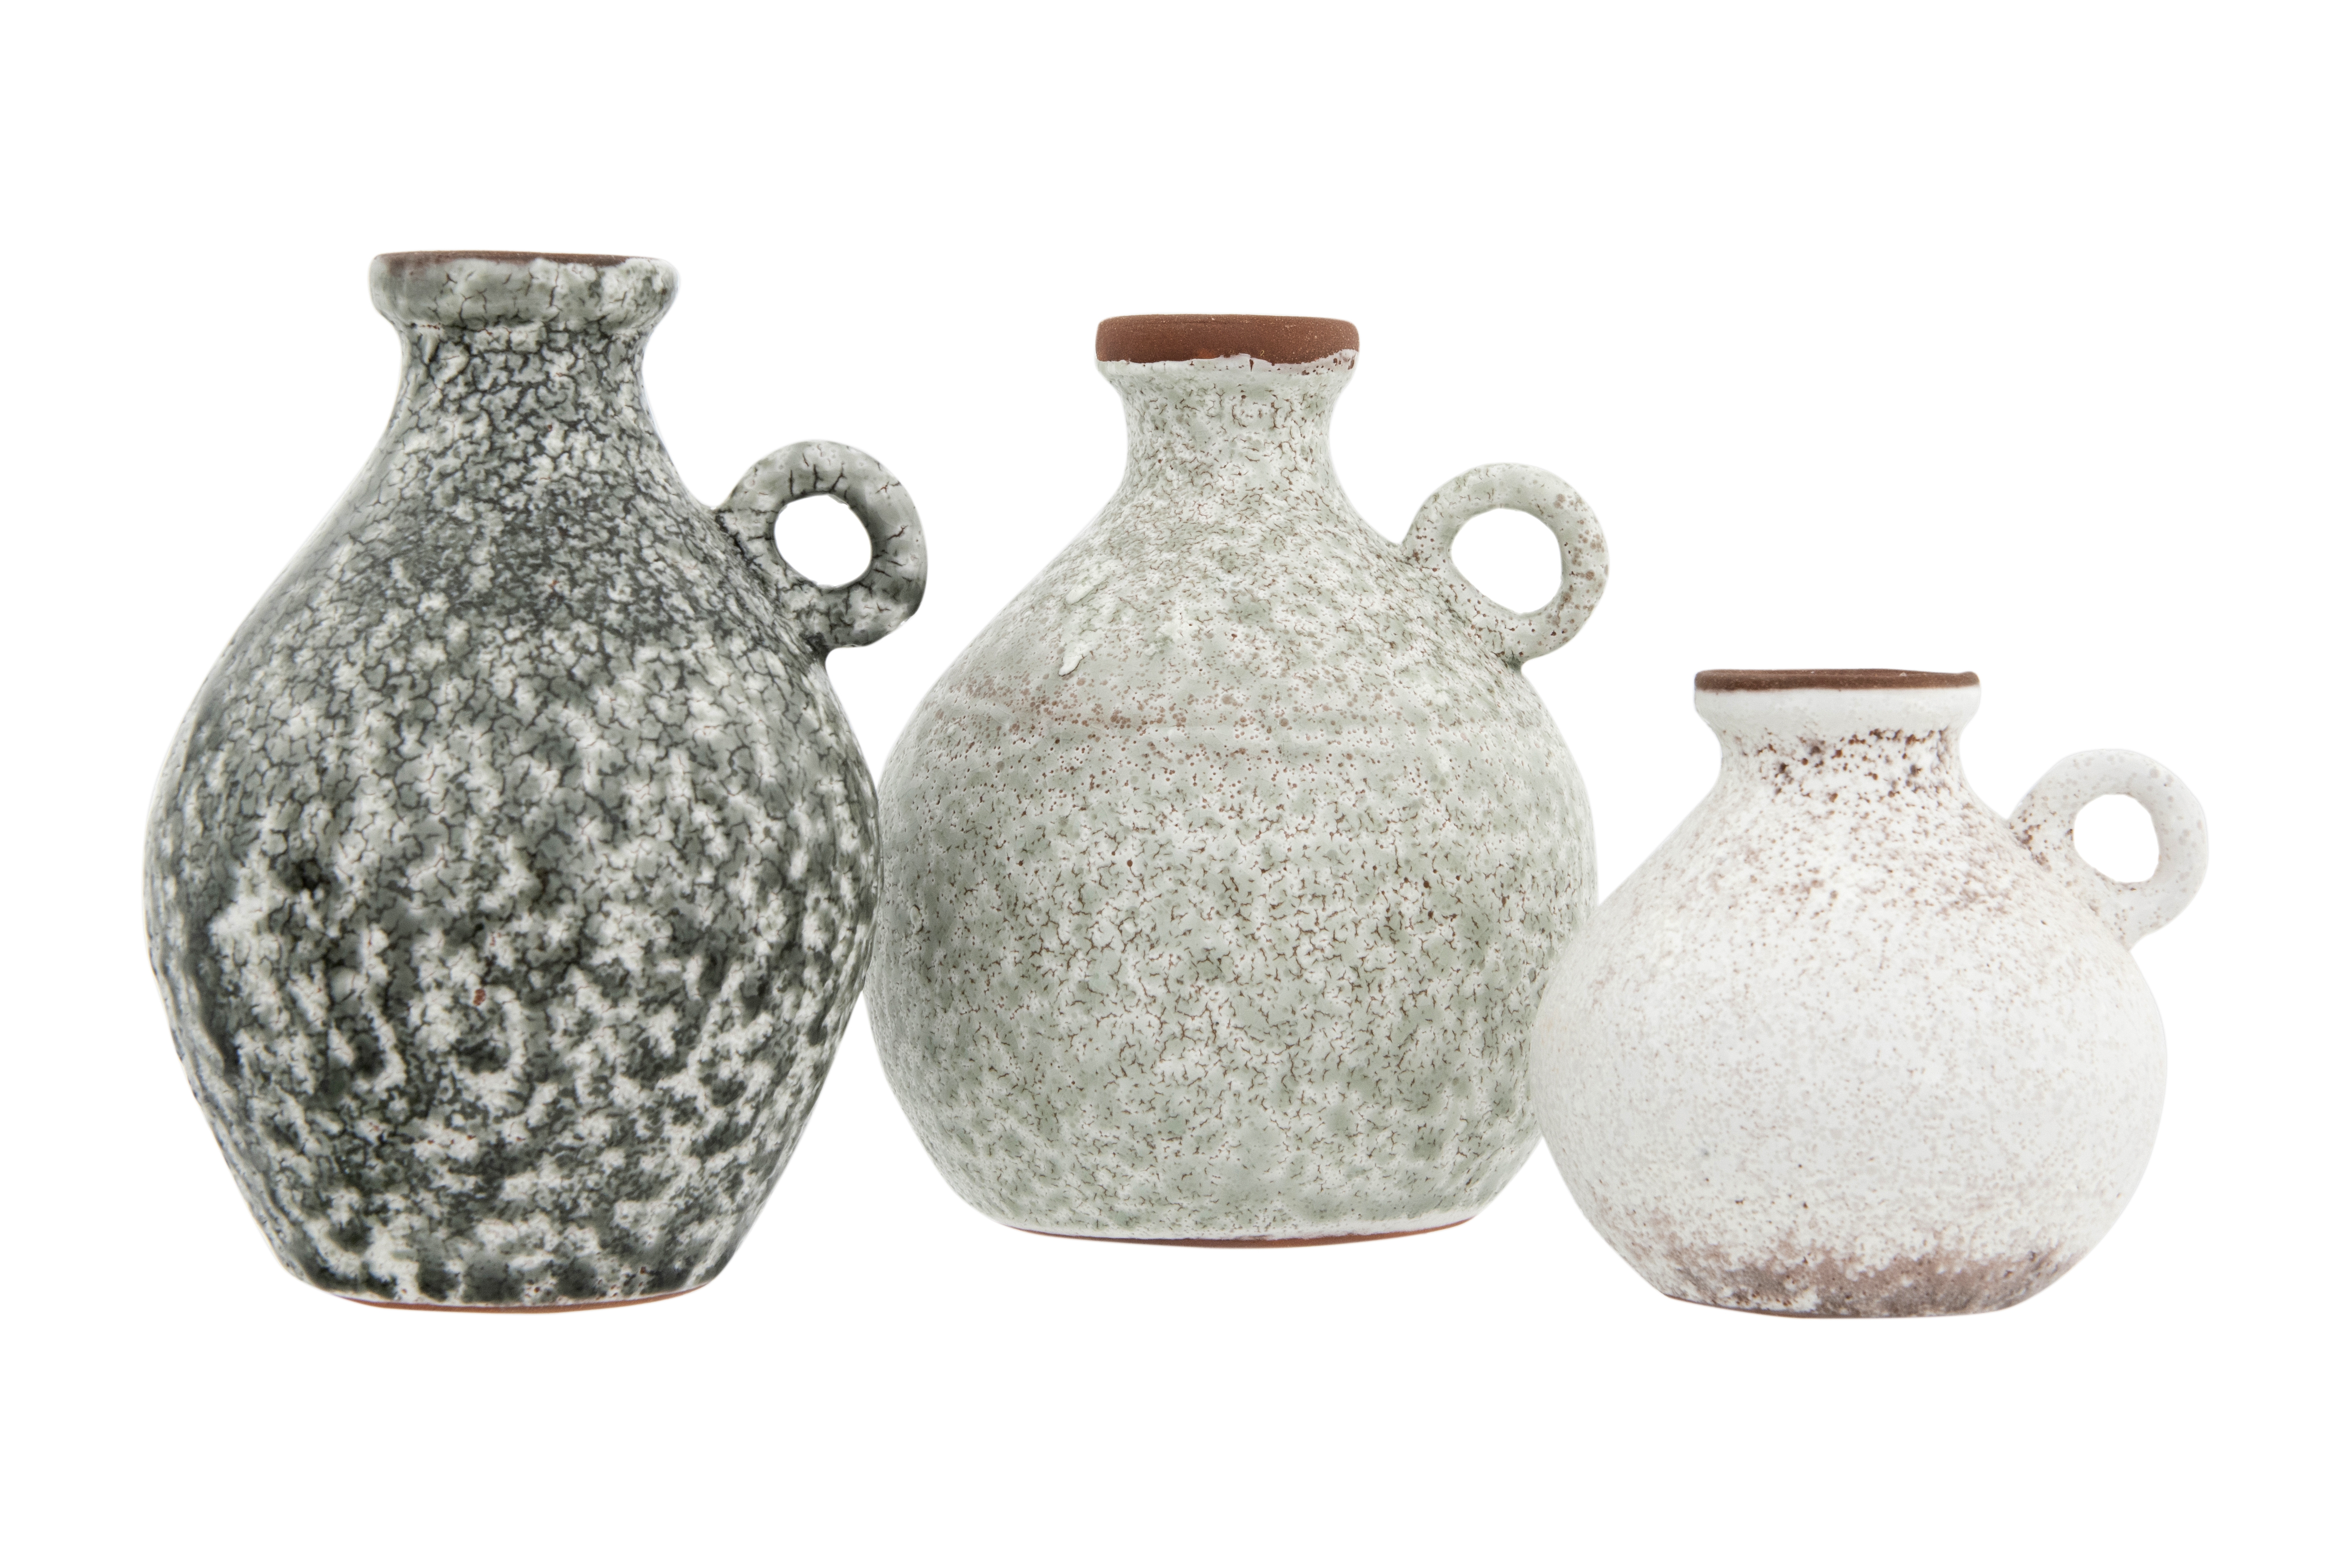 Distressed Grey Terracotta Vases with Reactive Glaze Finish (Set of 3 Sizes) - Image 0